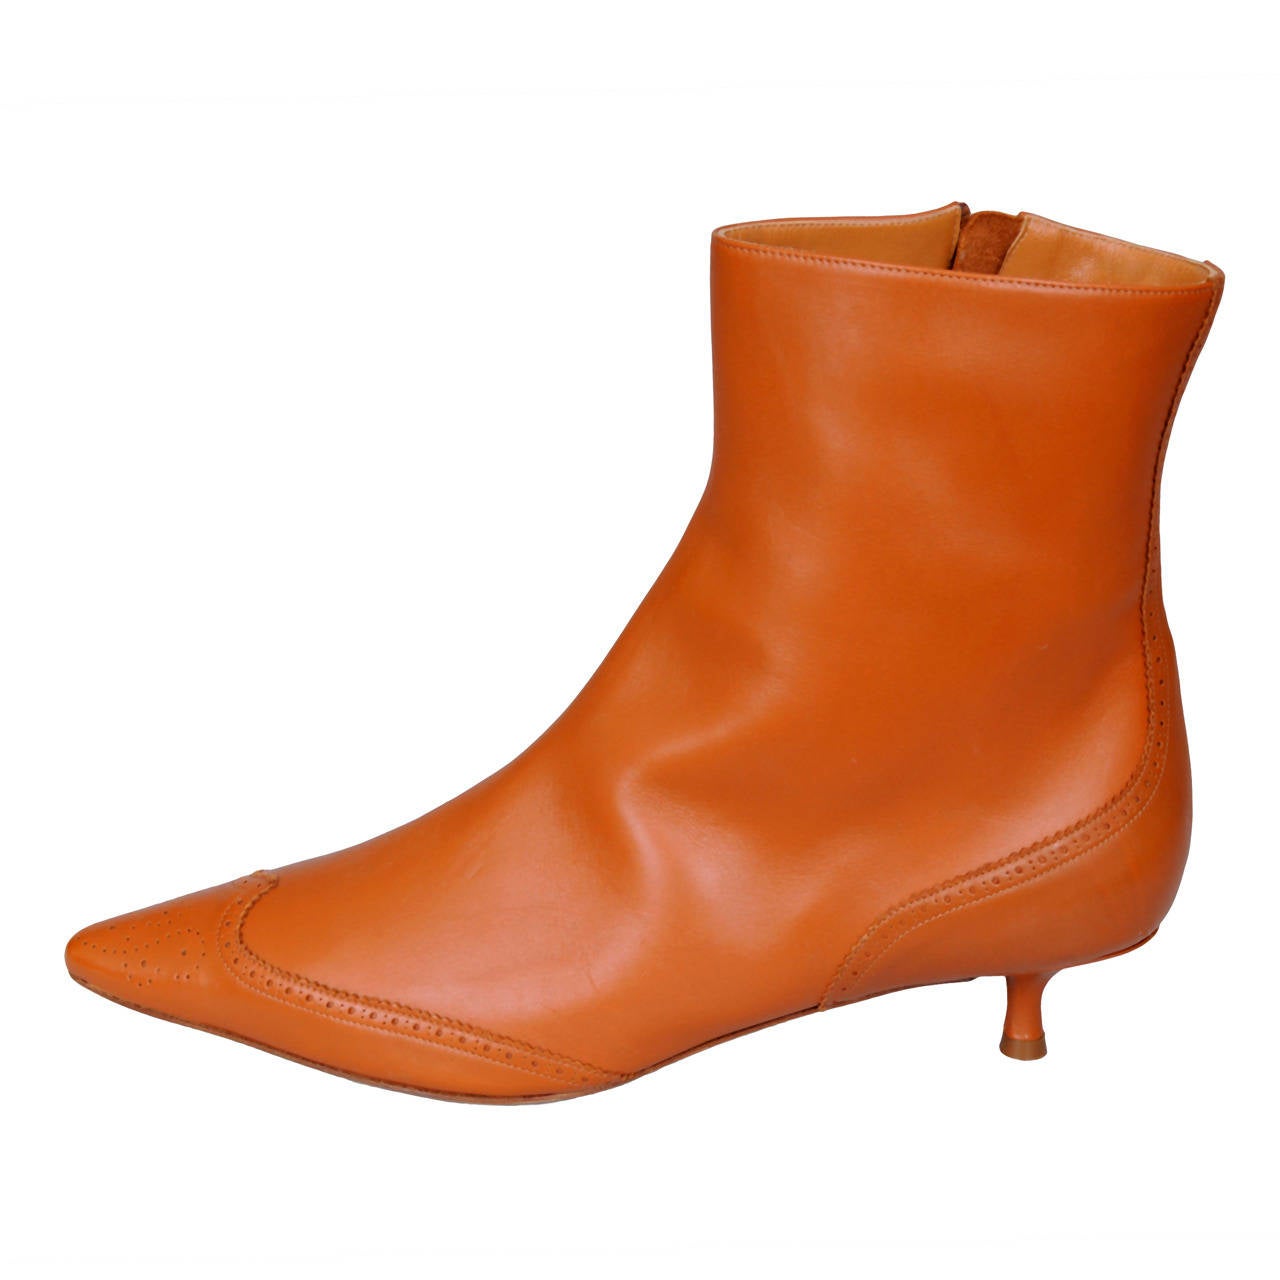 Asprey Caramel Leather Short Boots, Never Worn 40.5